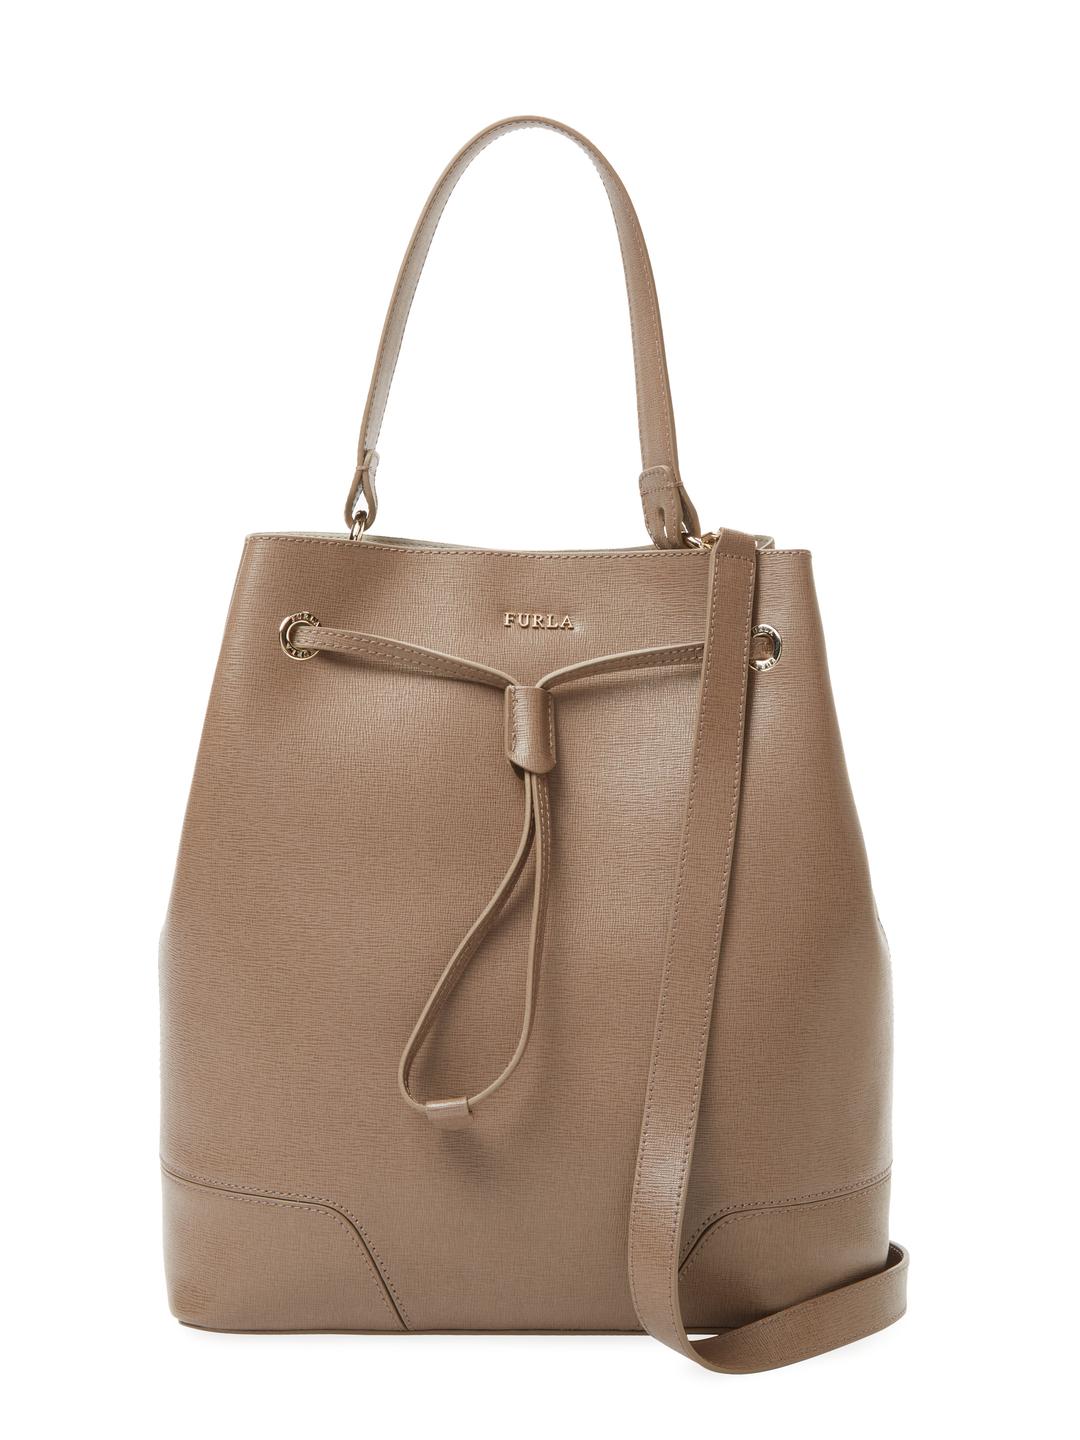 Furla Stacy Medium Saffiano Leather Bucket Bag in Tan (Brown) | Lyst